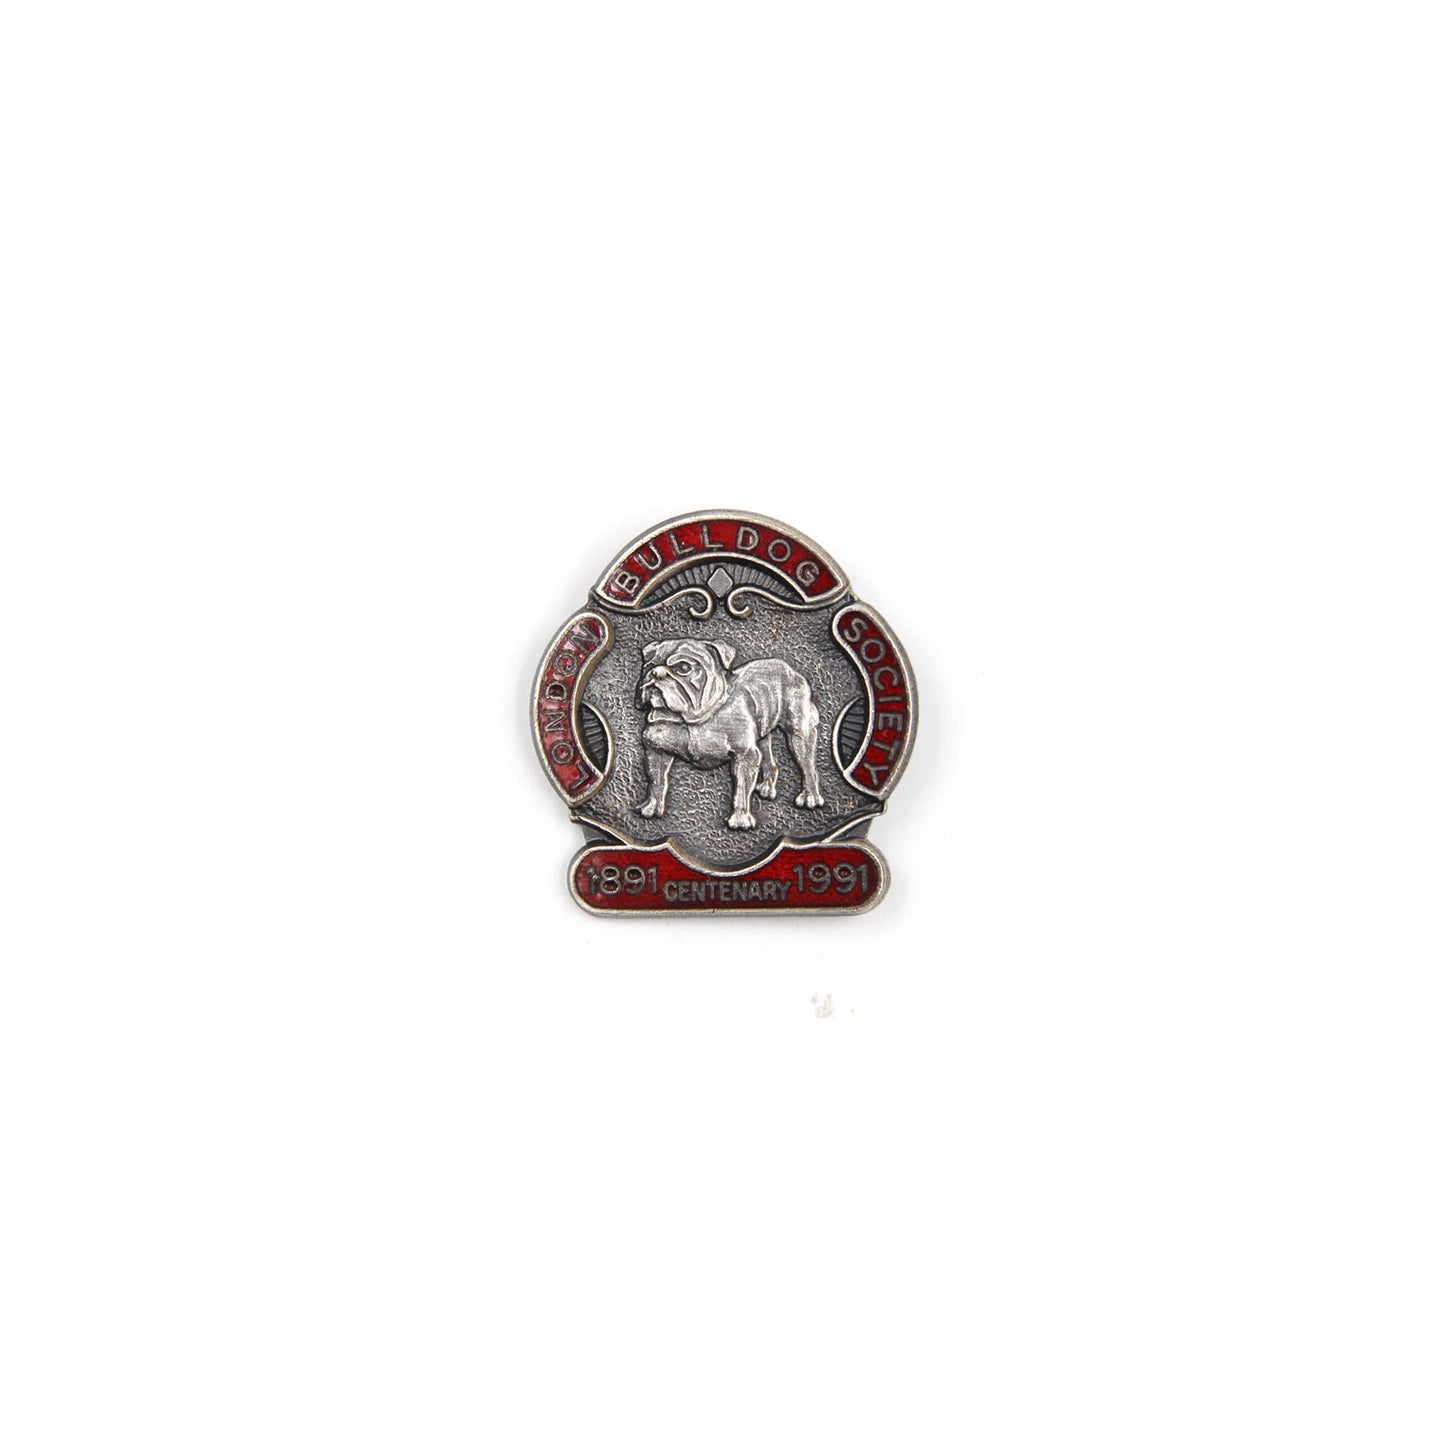 London Bulldog Society Badge - SOLD